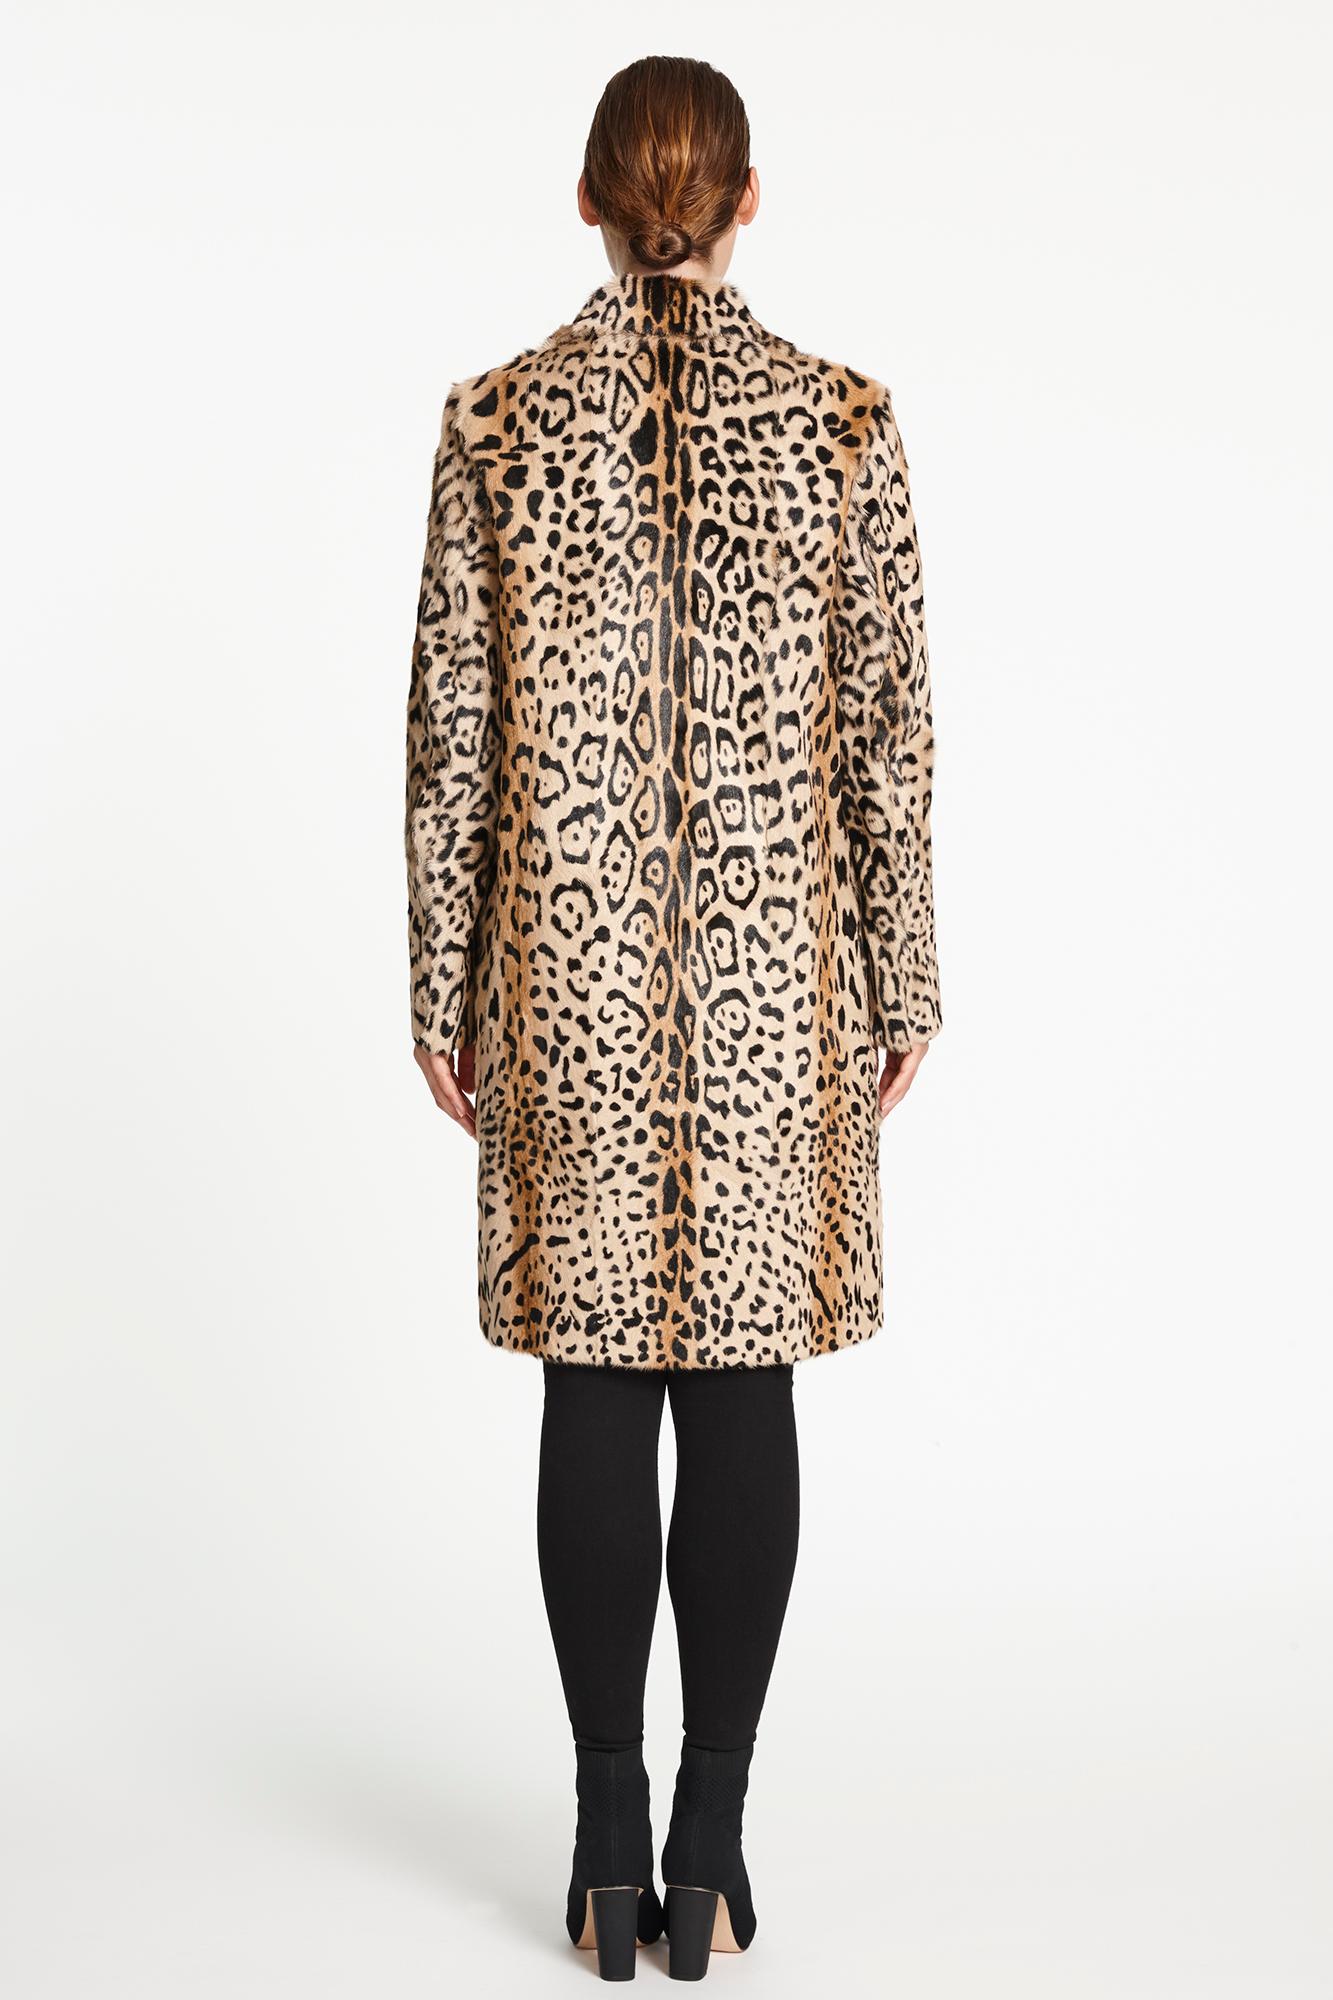 Verheyen London Leopard Print Coat in Red Ruby Goat Hair Fur UK 12  - Brand New  3